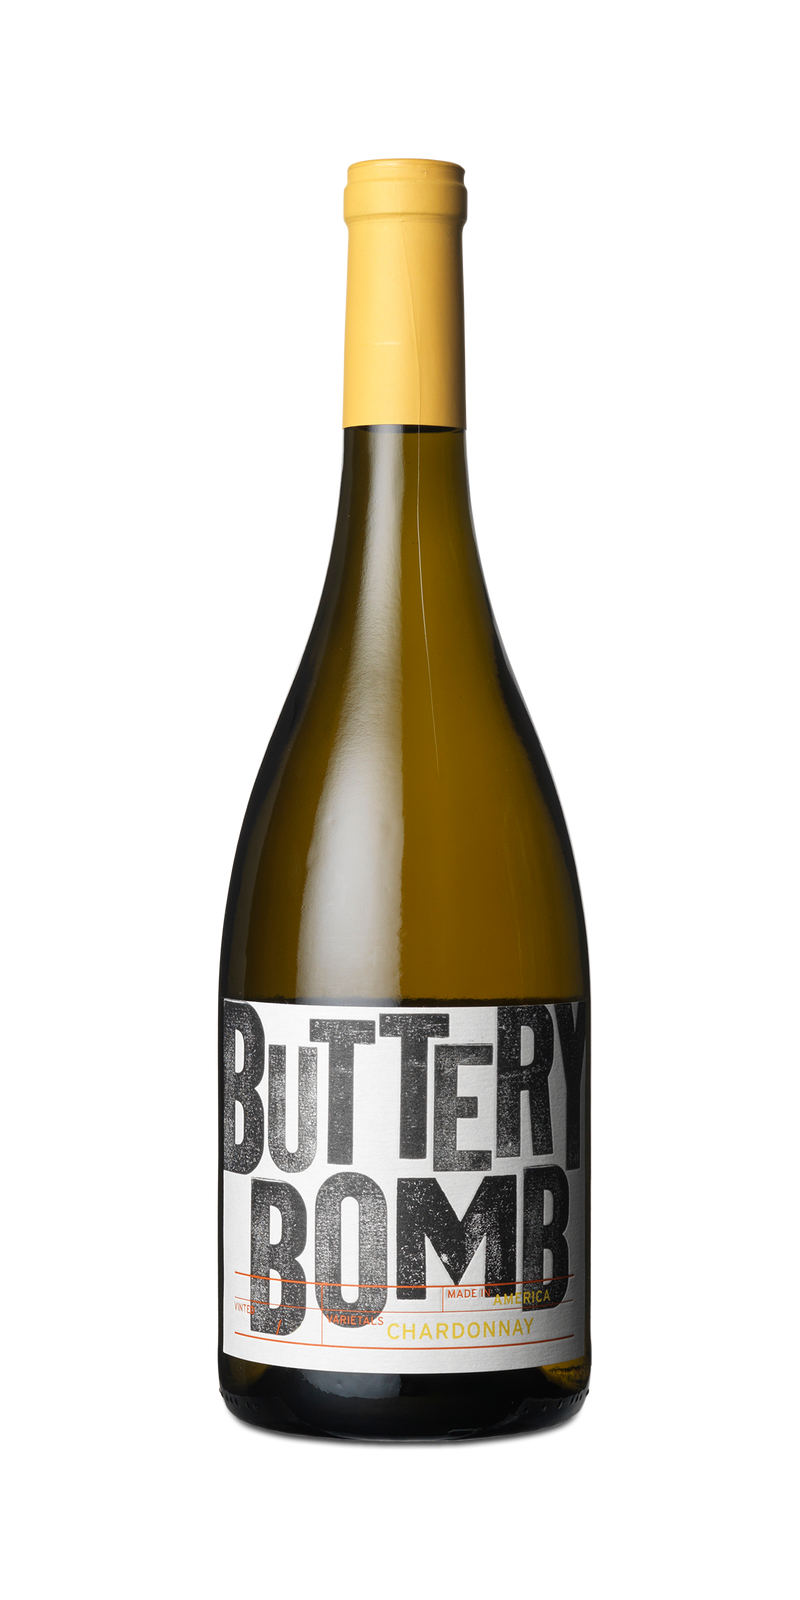 Buttery Bomb, Chardonnay, California 2018